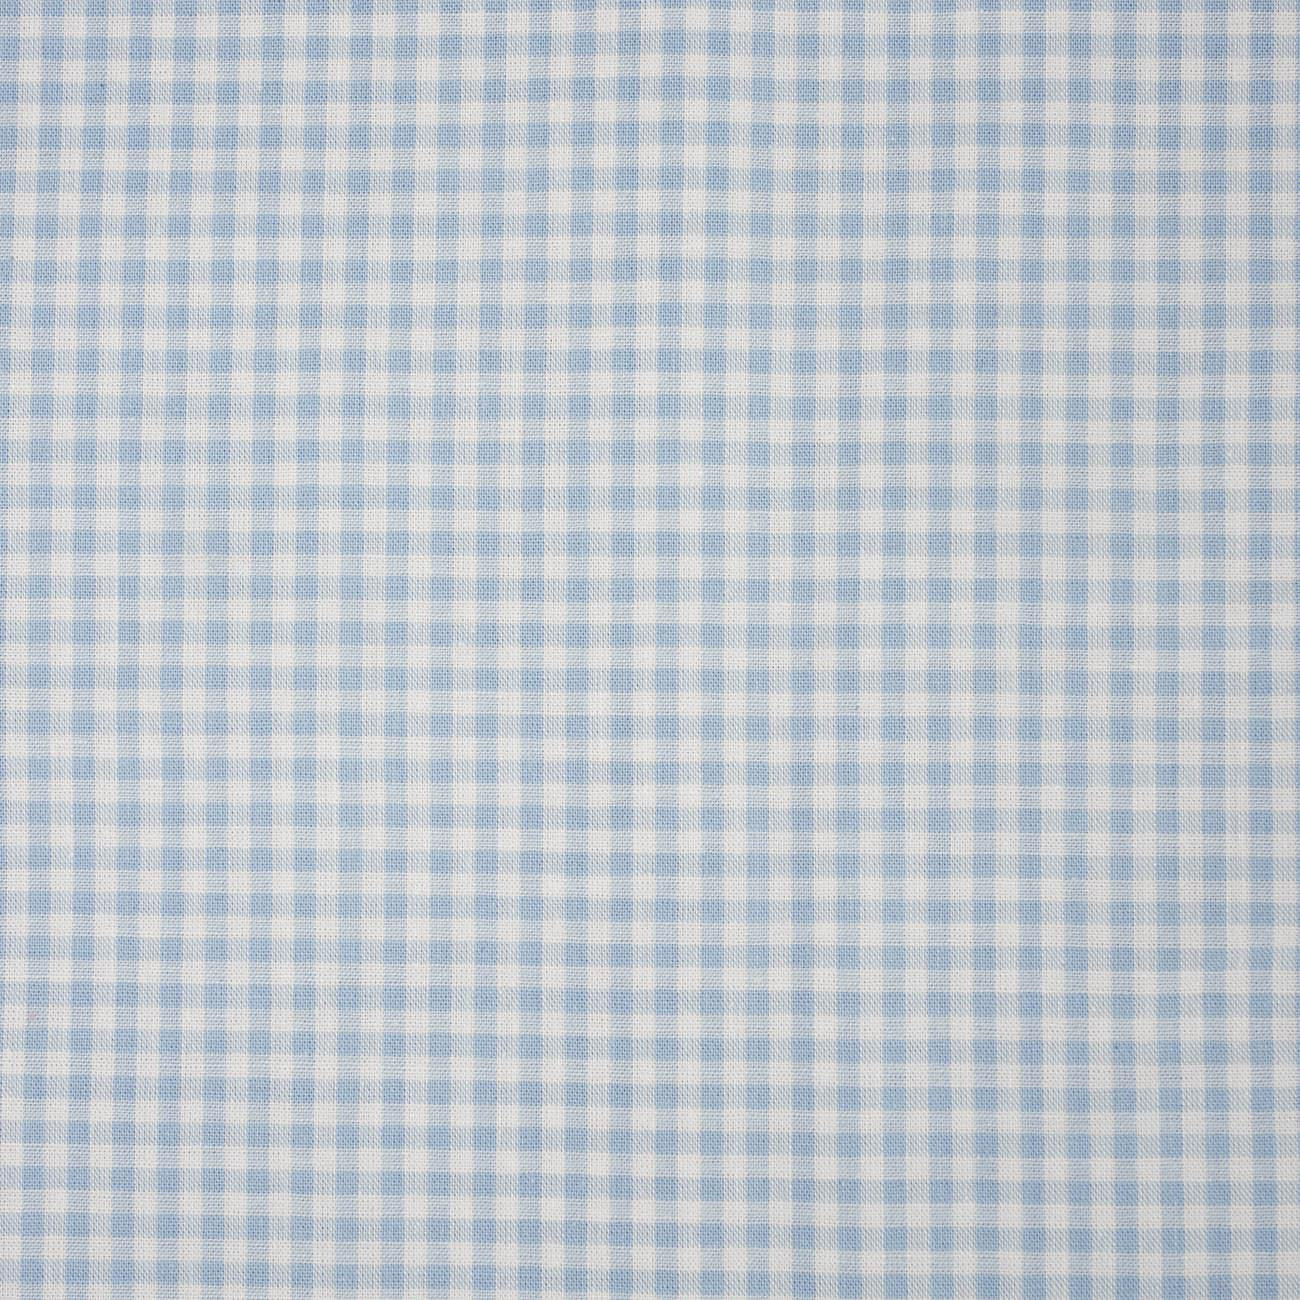 WHITE DOTS / light blue - Cotton woven fabric